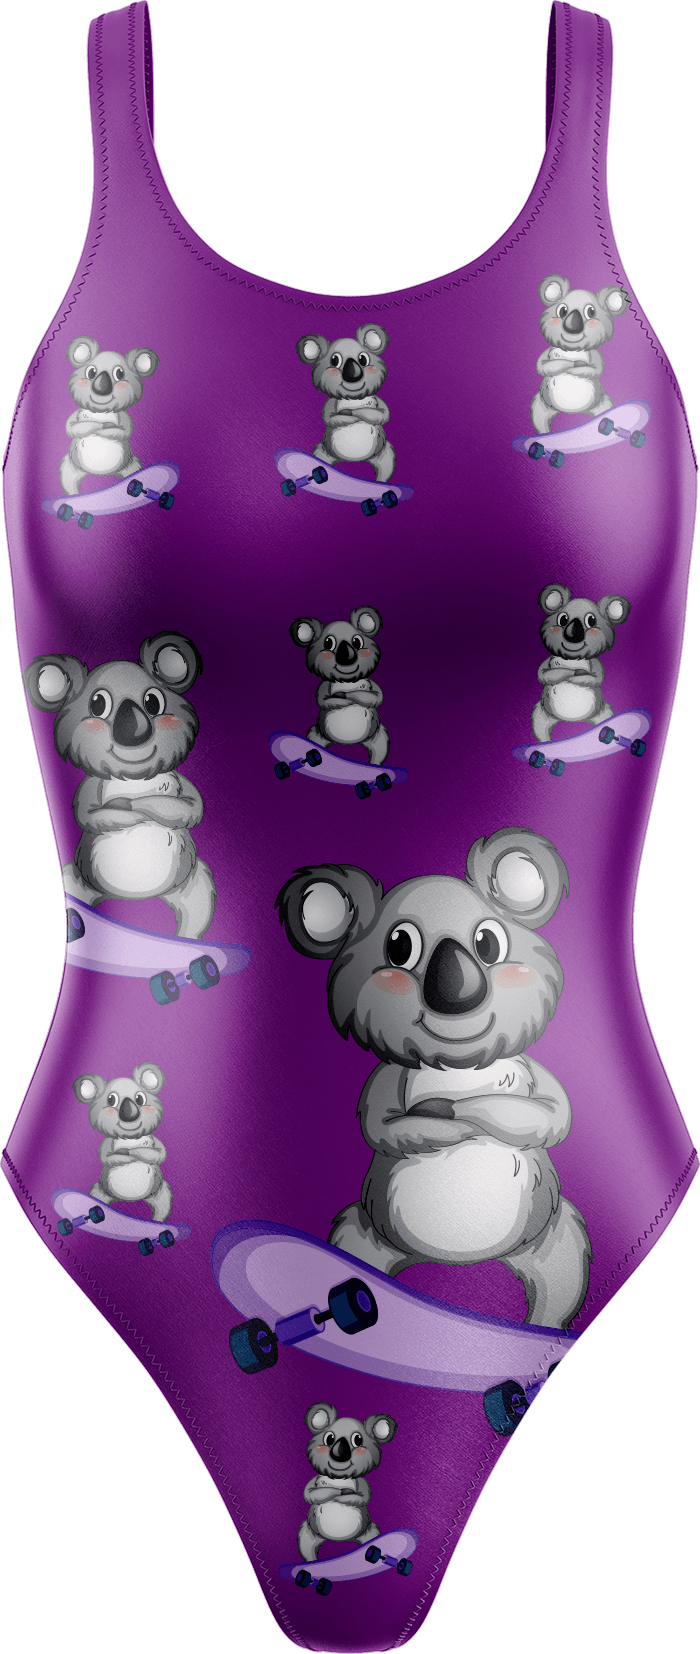 Skater Koala Swimsuits - fungear.com.au